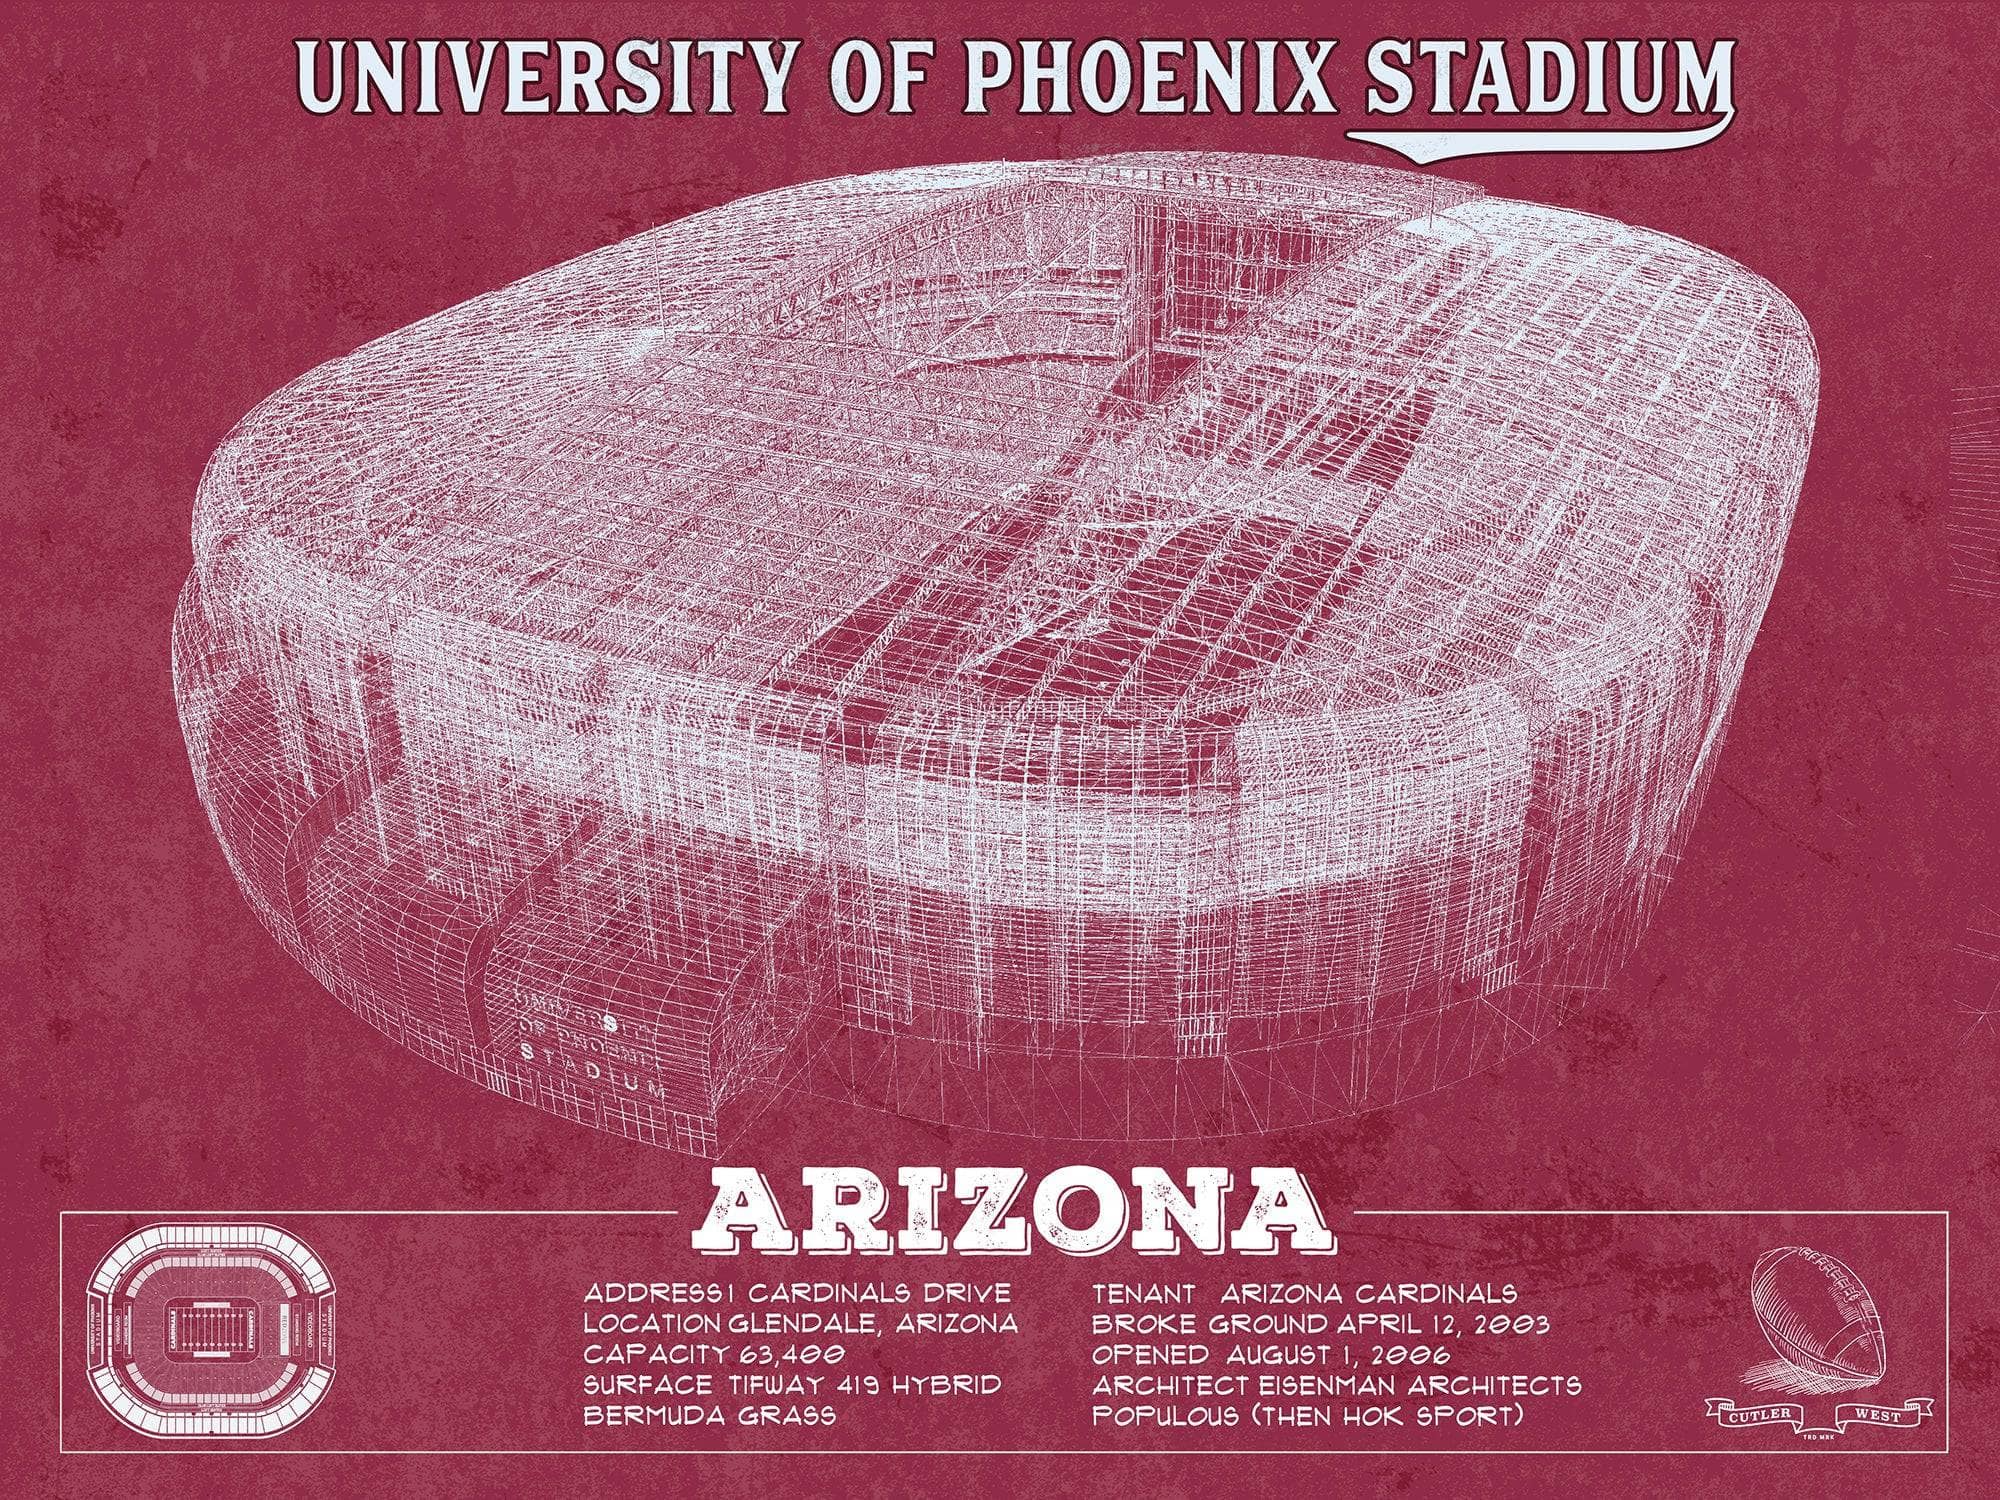 Cutler West Pro Football Collection 14" x 11" / Unframed Arizona Cardinals - University of Phoenix Stadium Vintage Football Team Color Print 701397572_69193